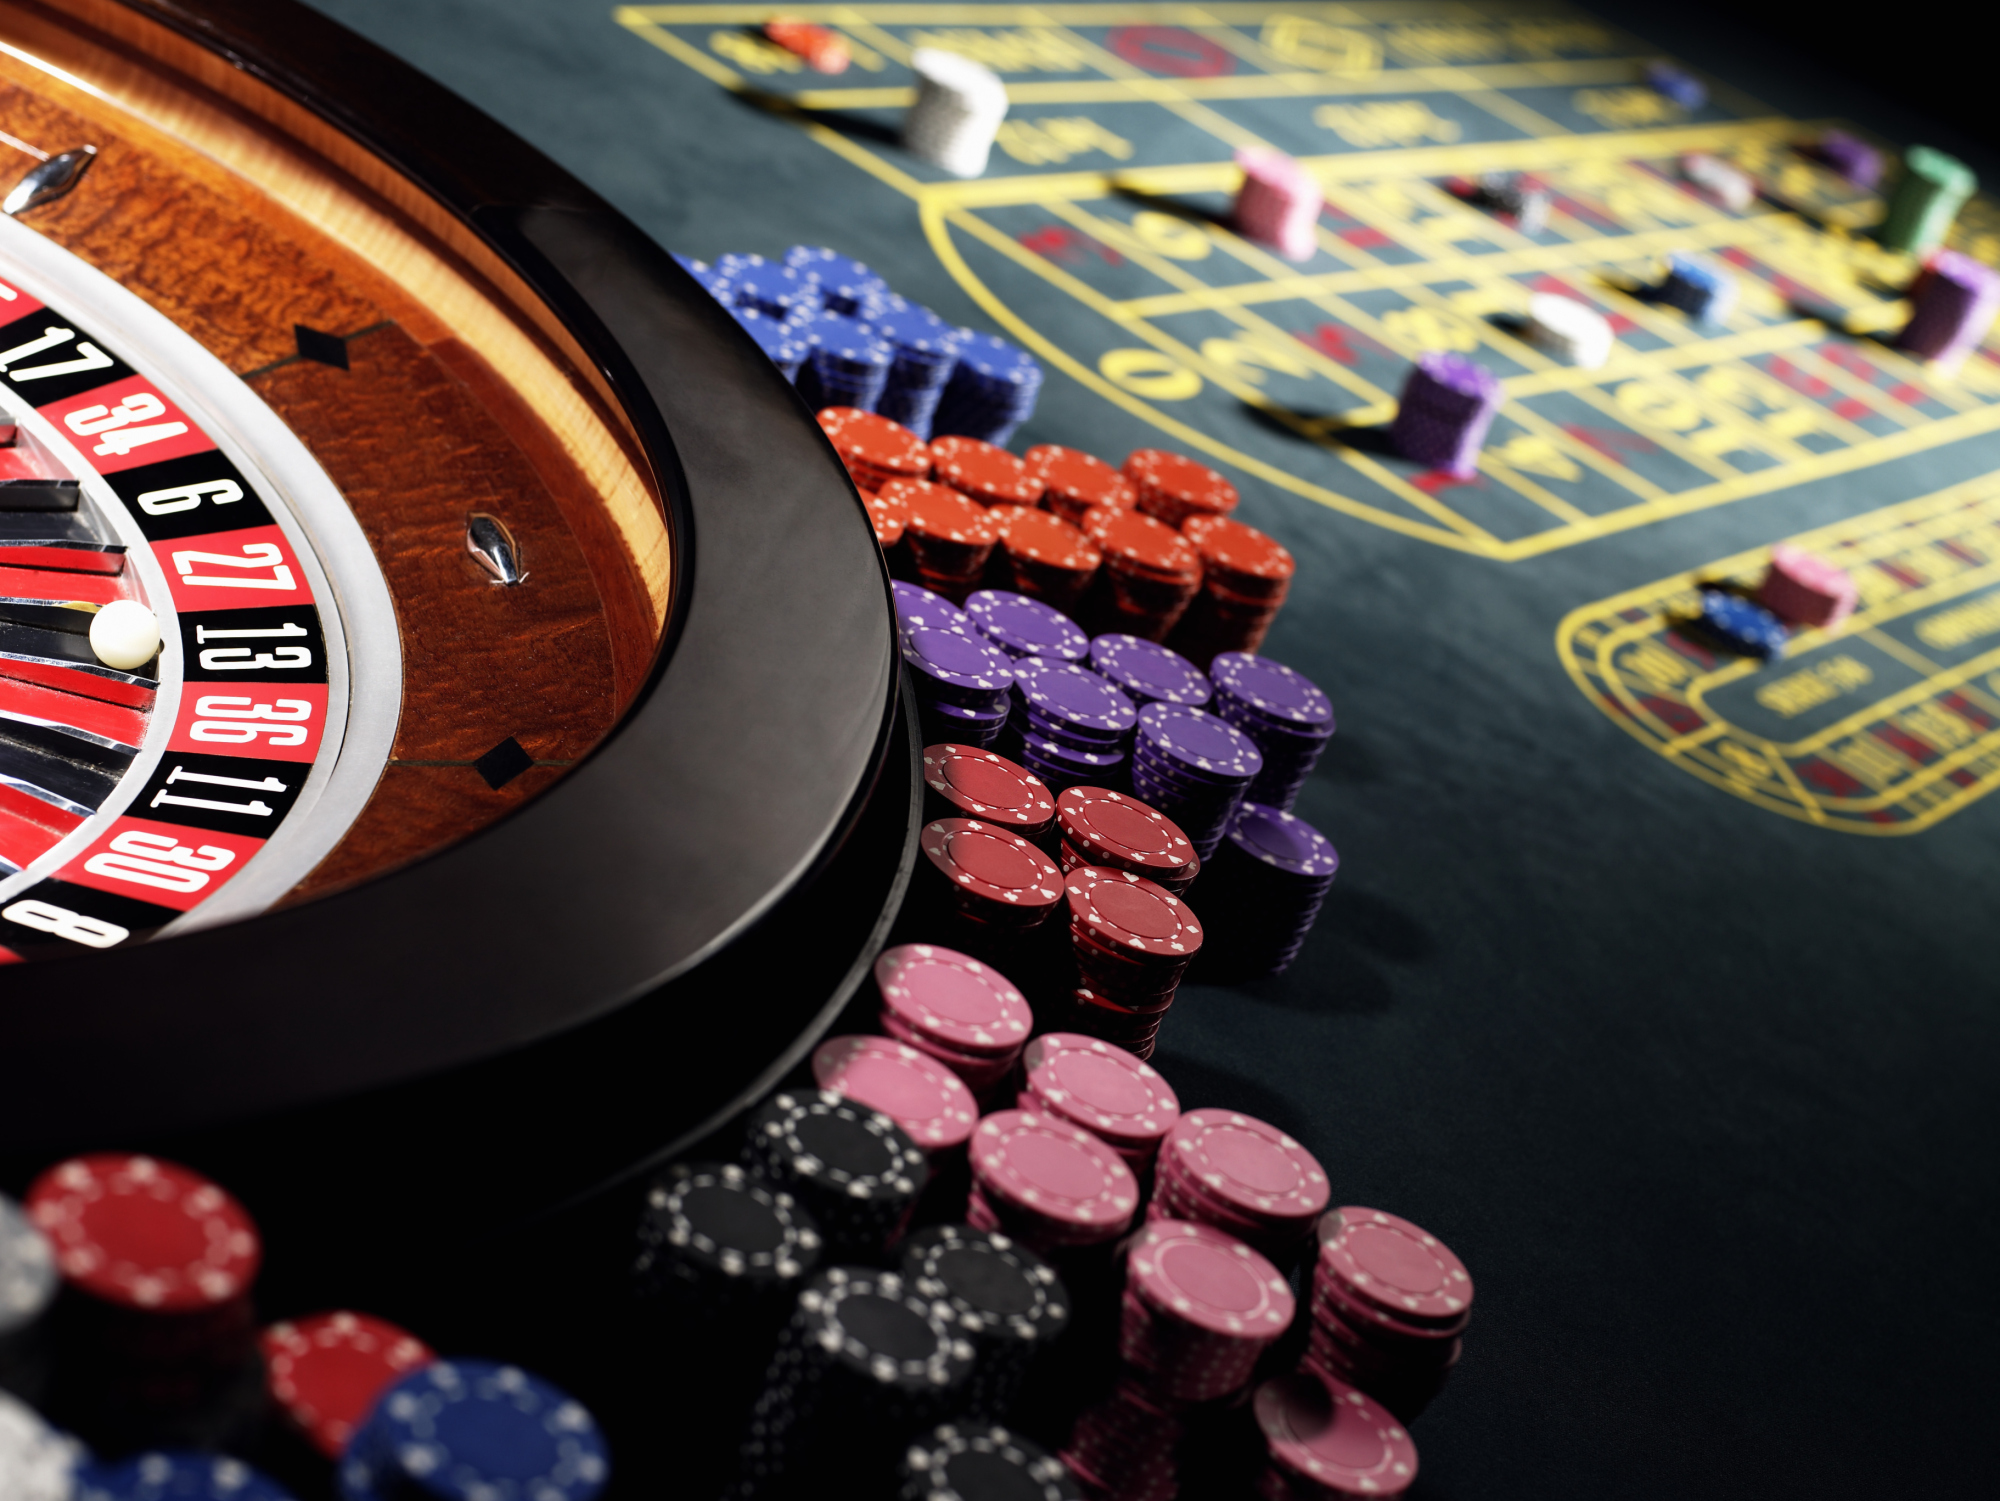 Sky casino wants more cashless gambling - NZ Herald